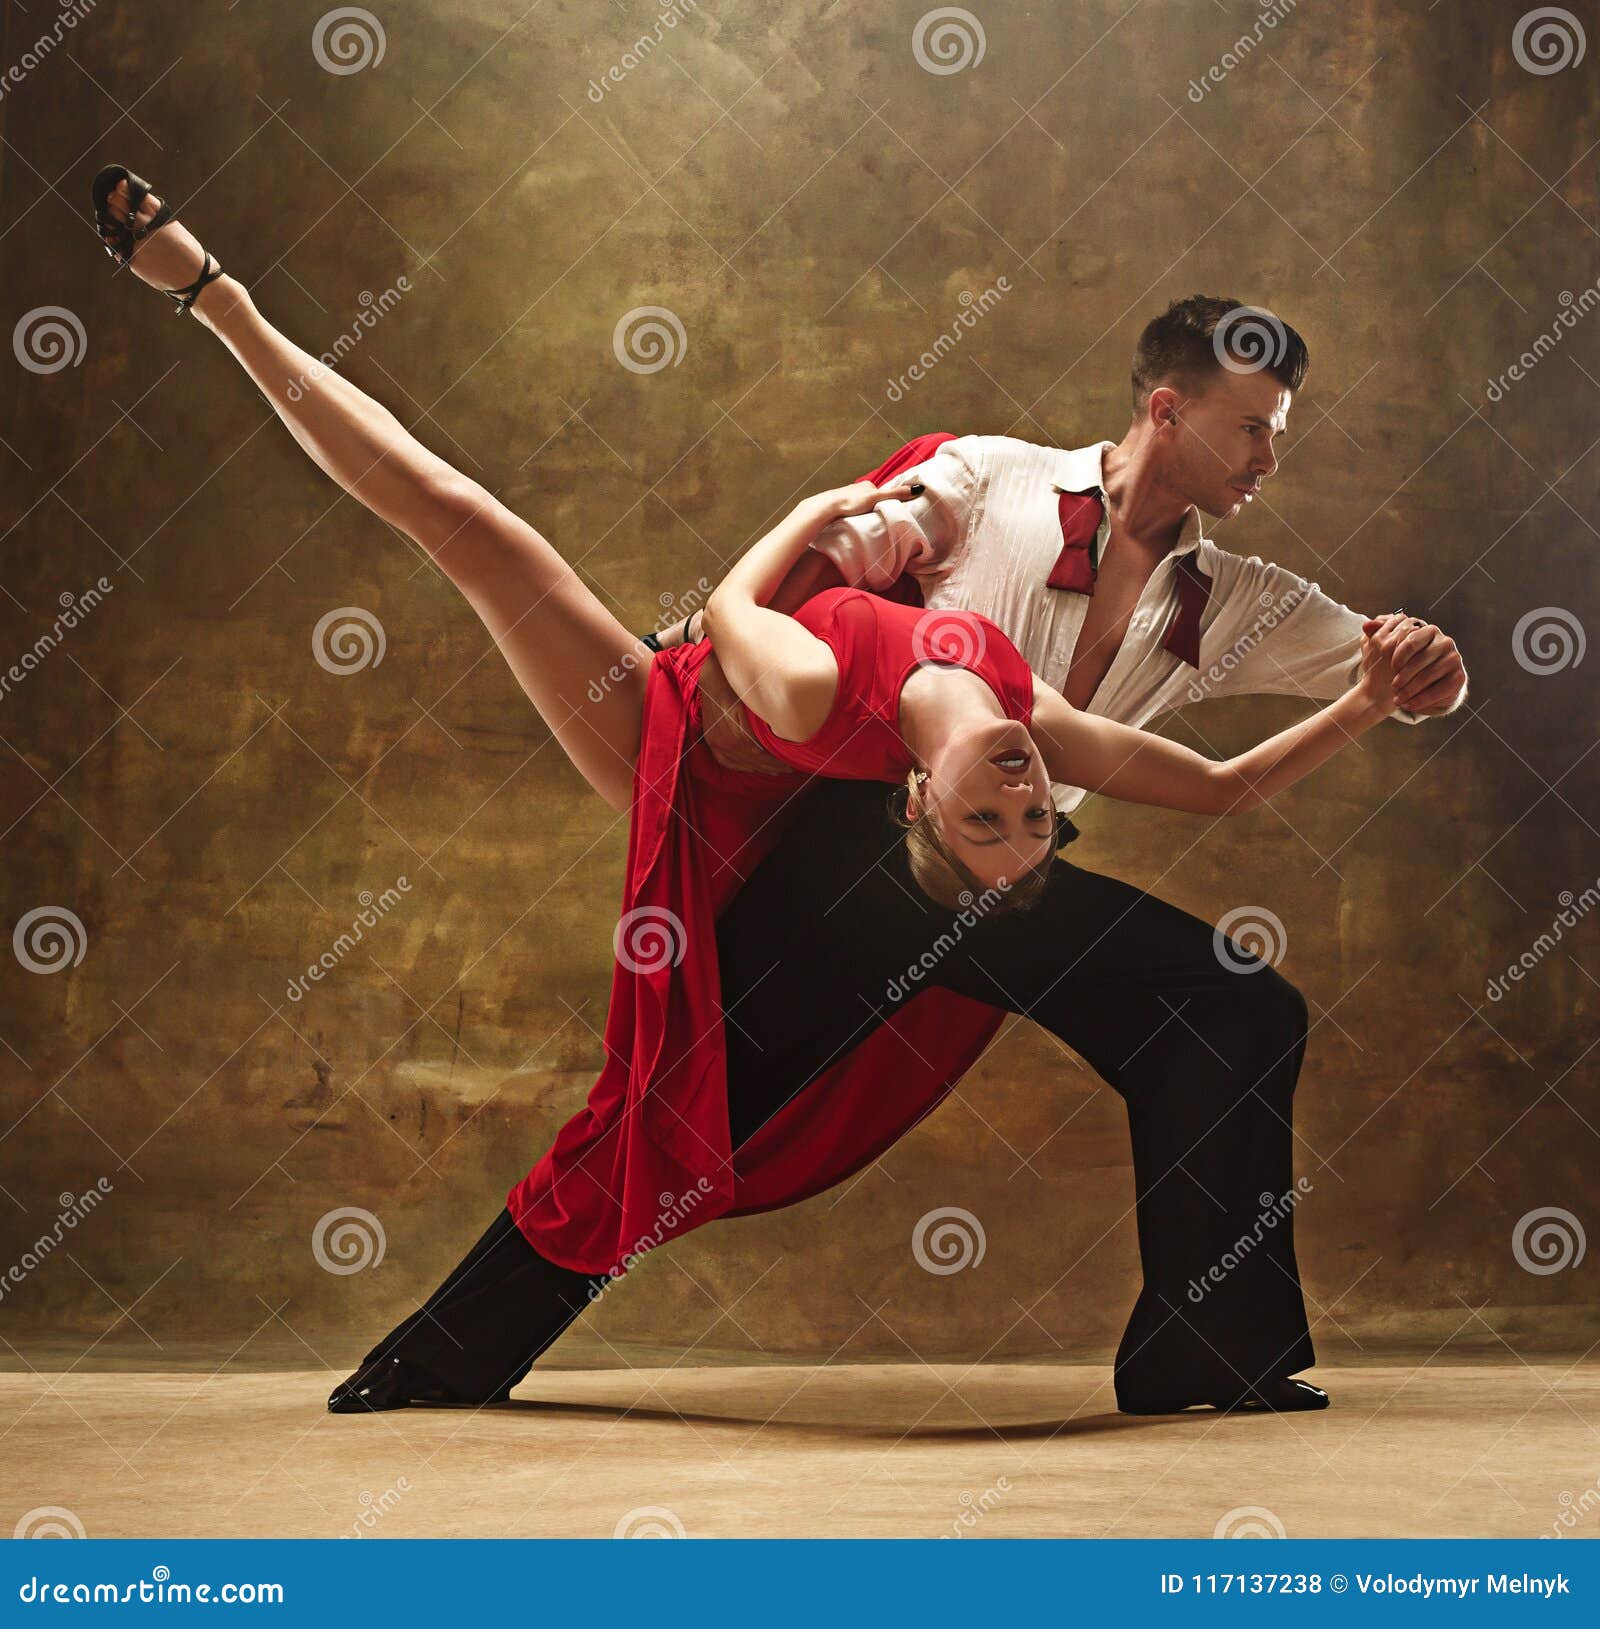 Aggregate more than 147 tango dance poses